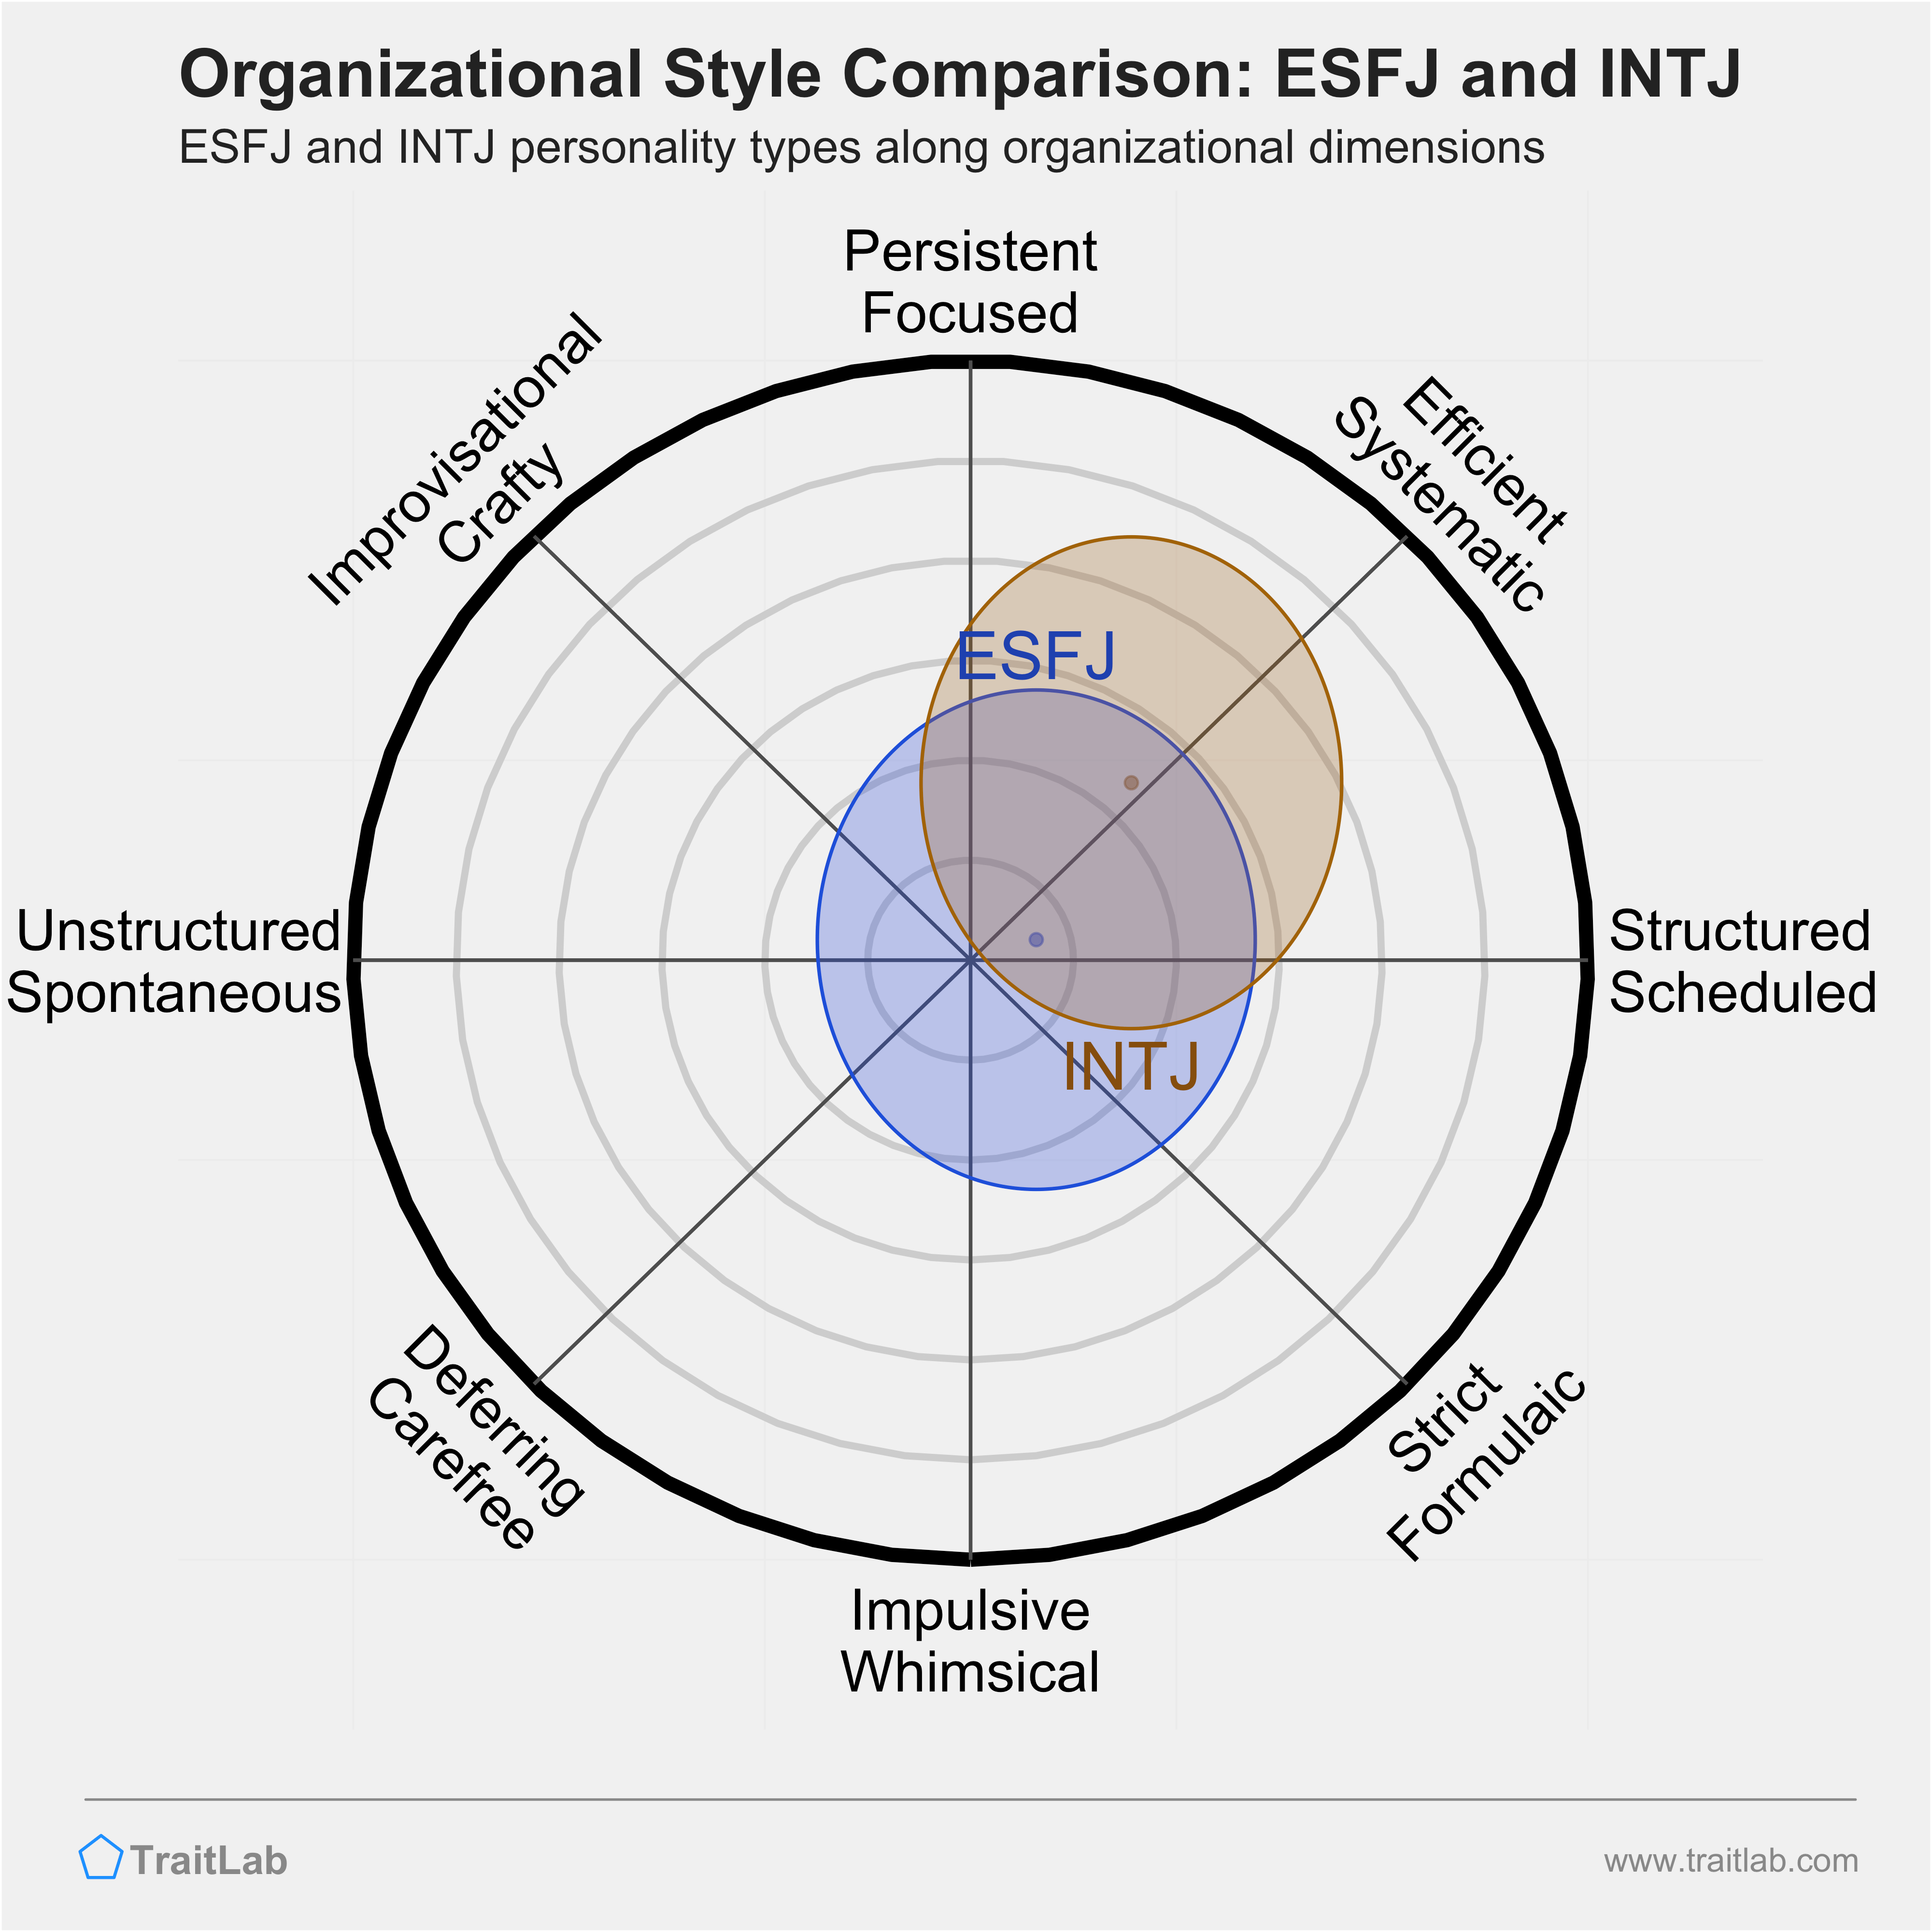 ESFJ and INTJ comparison across organizational dimensions